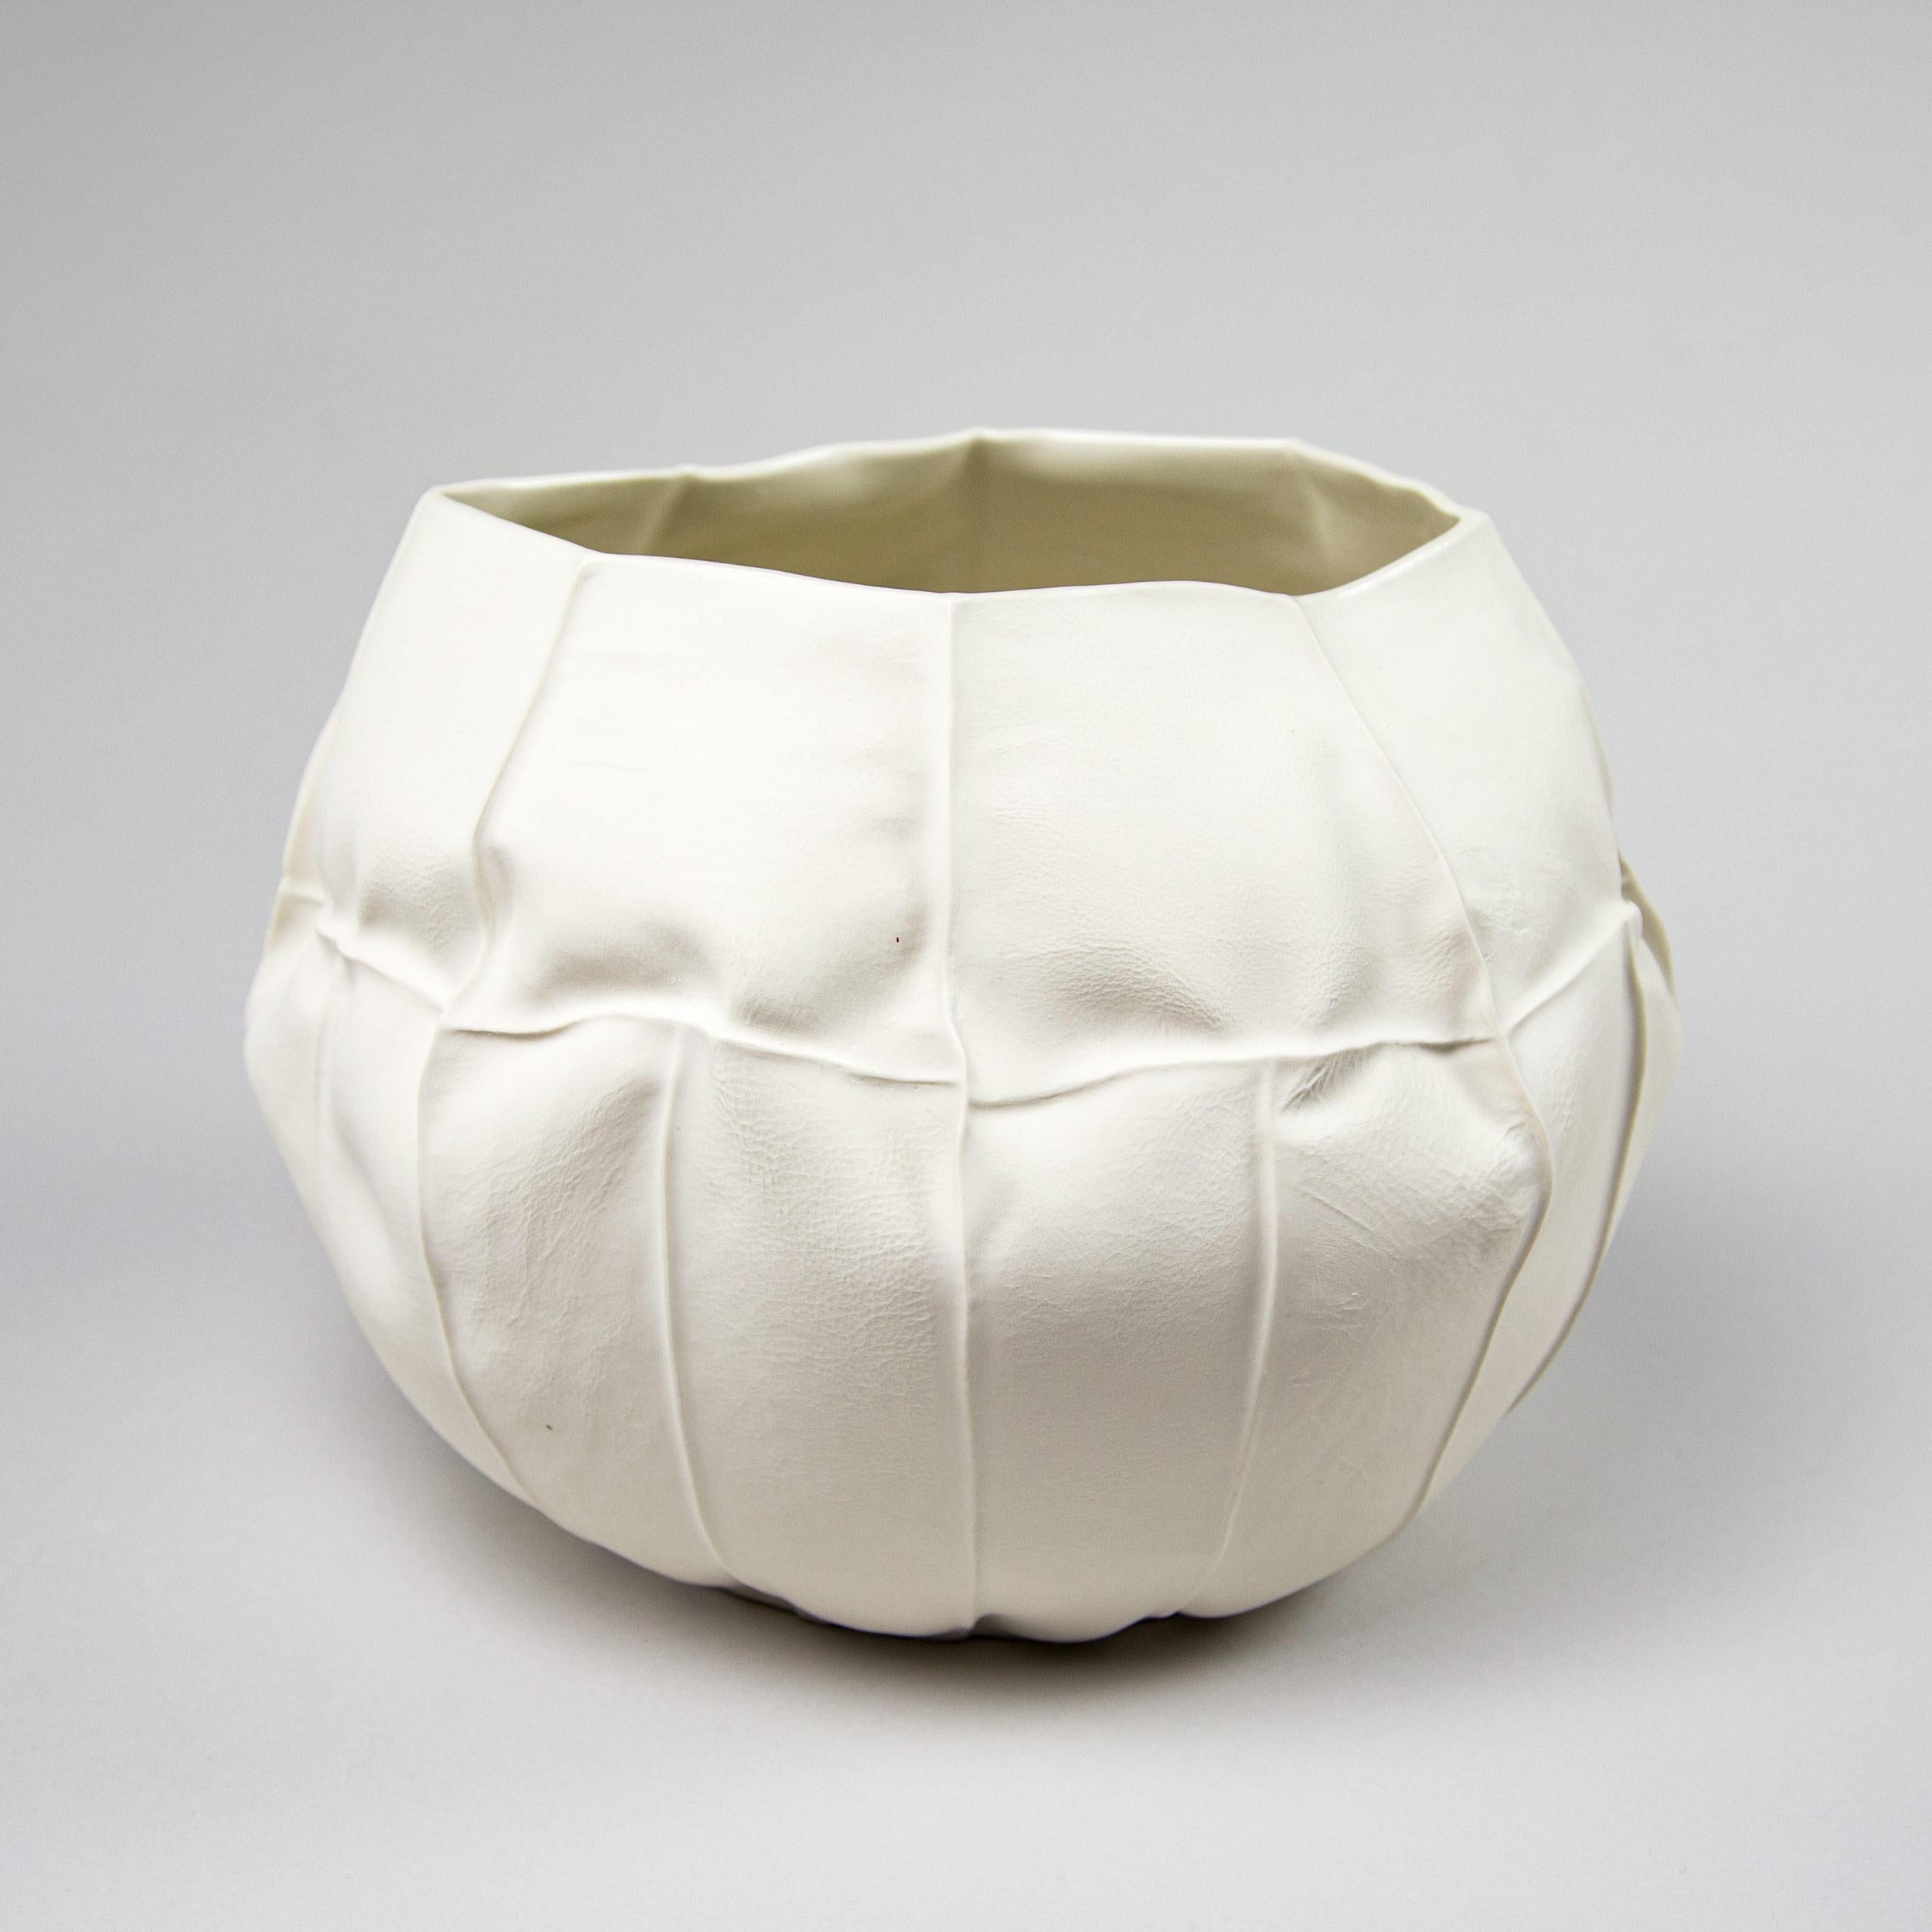 Modern Organic White Ceramic Kawa Vessel, Large 02, Leather Cast Porcelain Vase For Sale